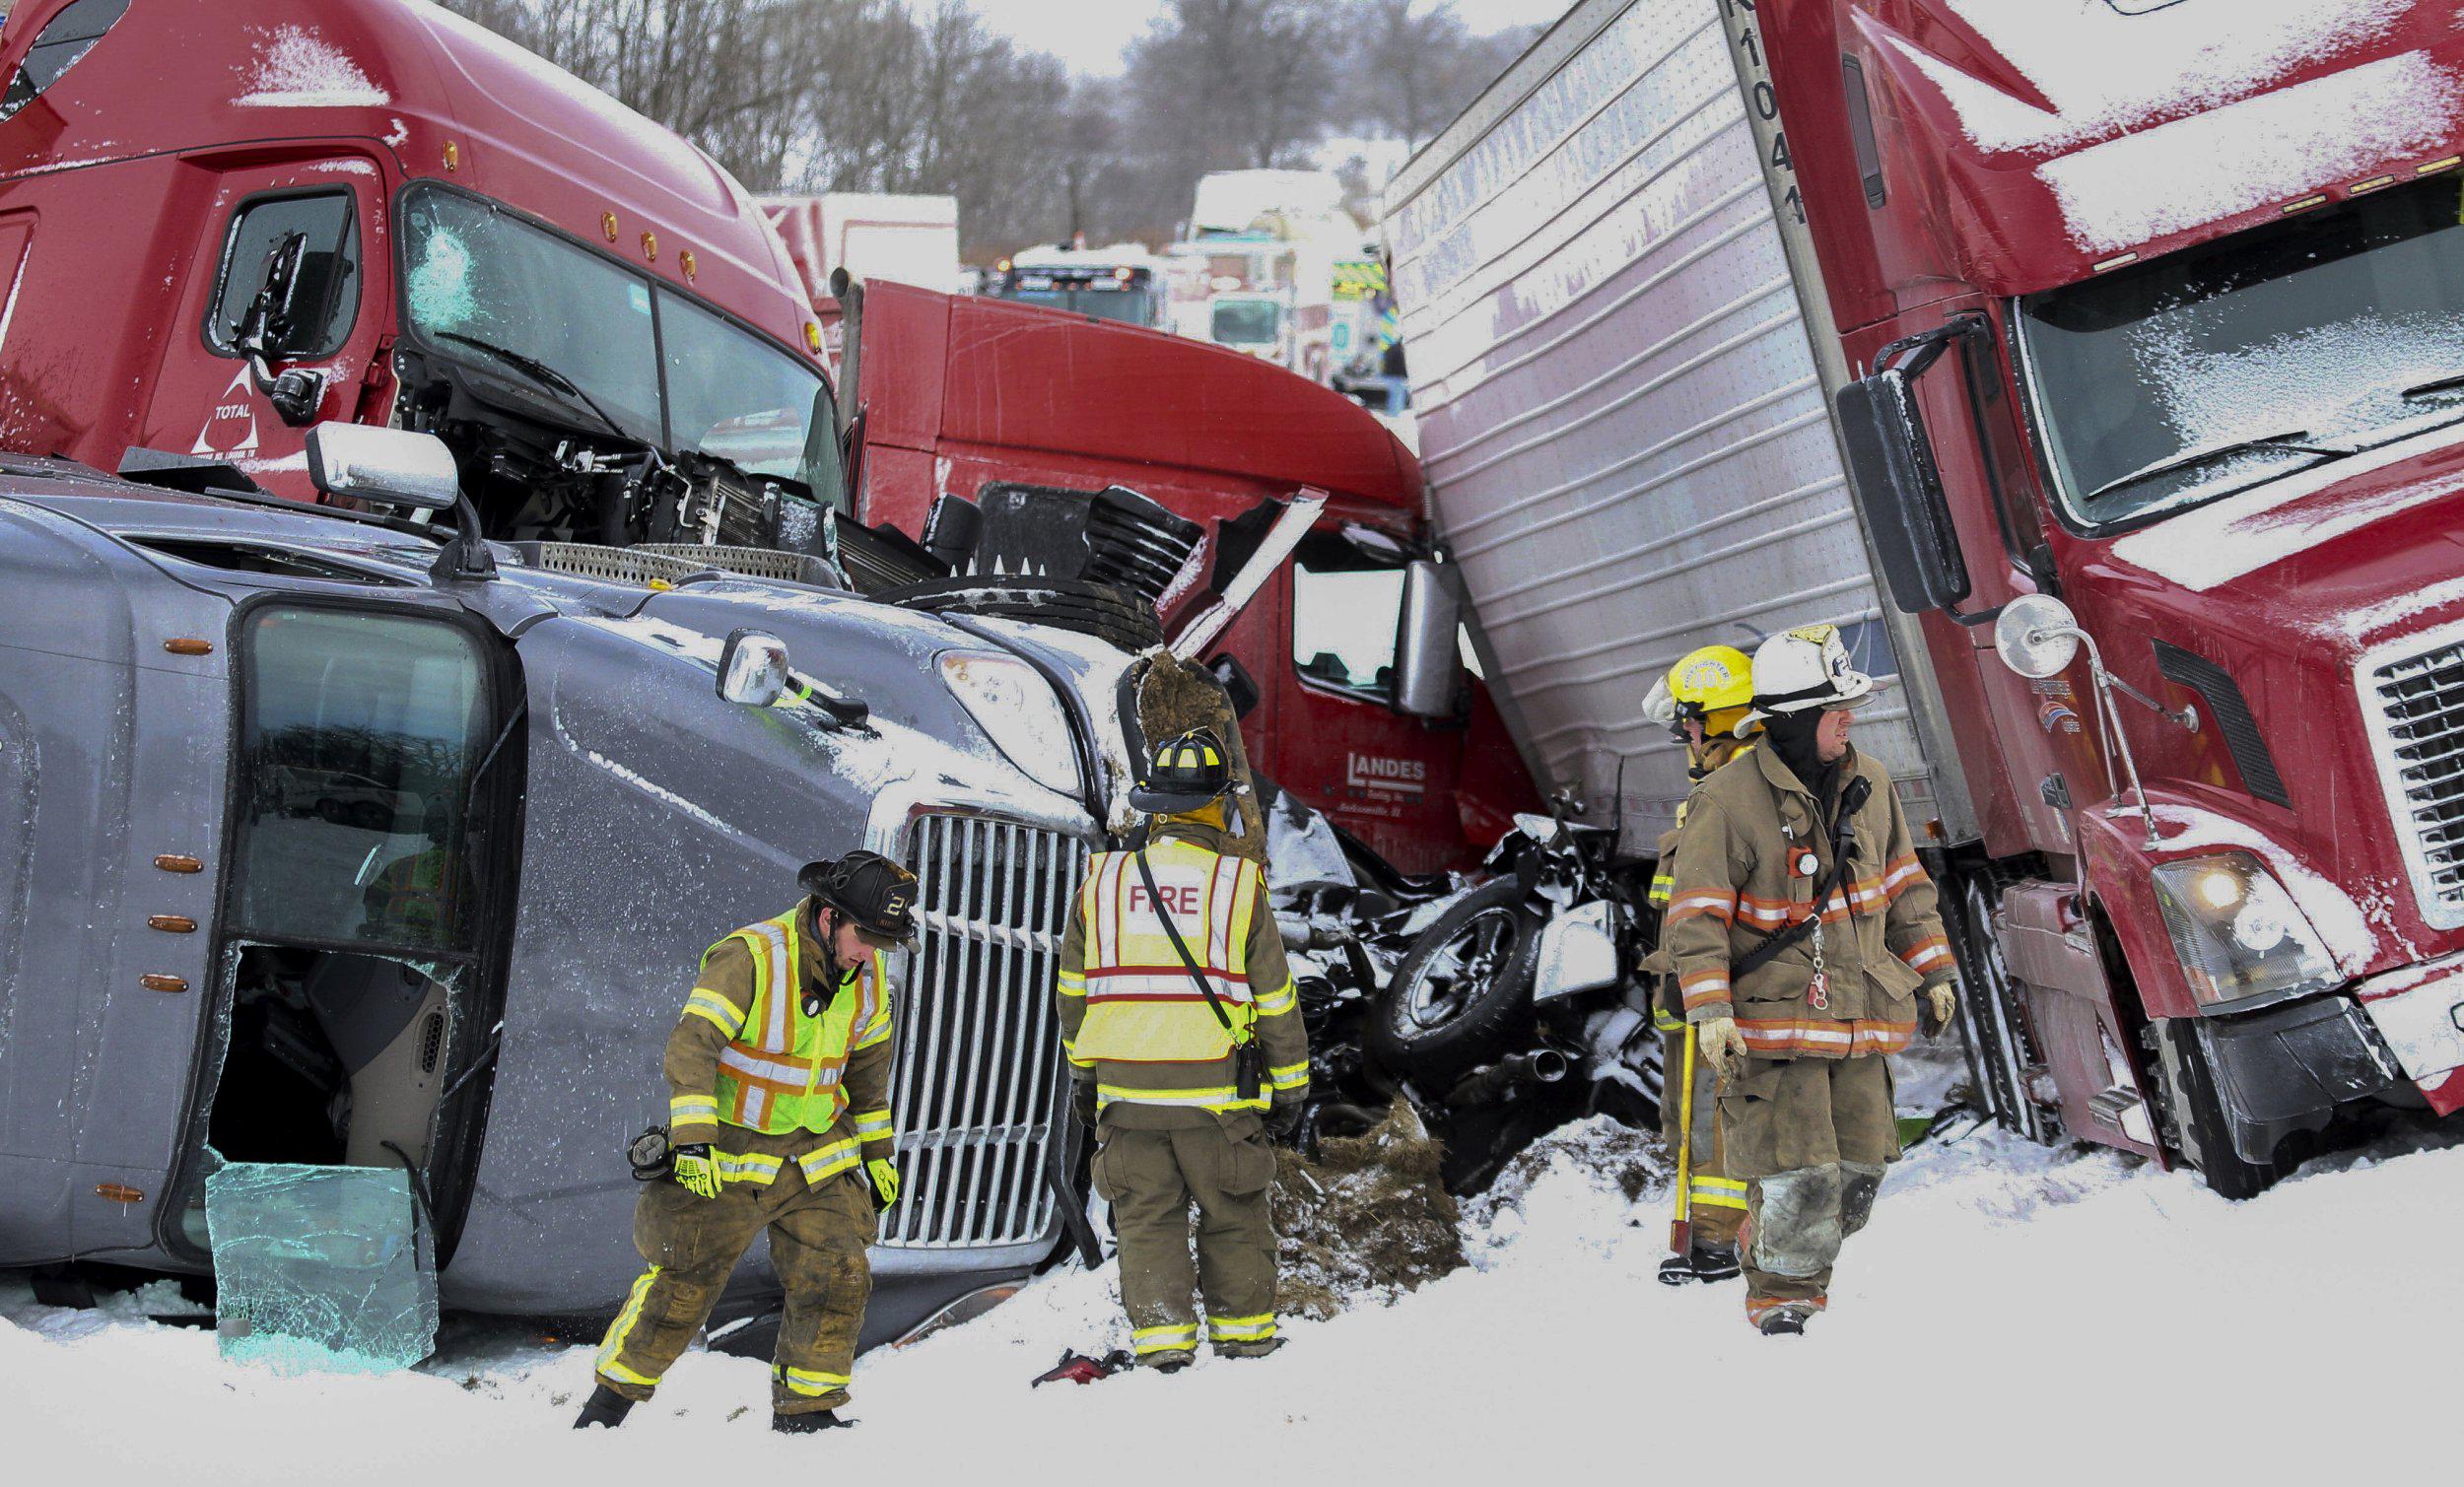 Аварий грузовых автомобилей